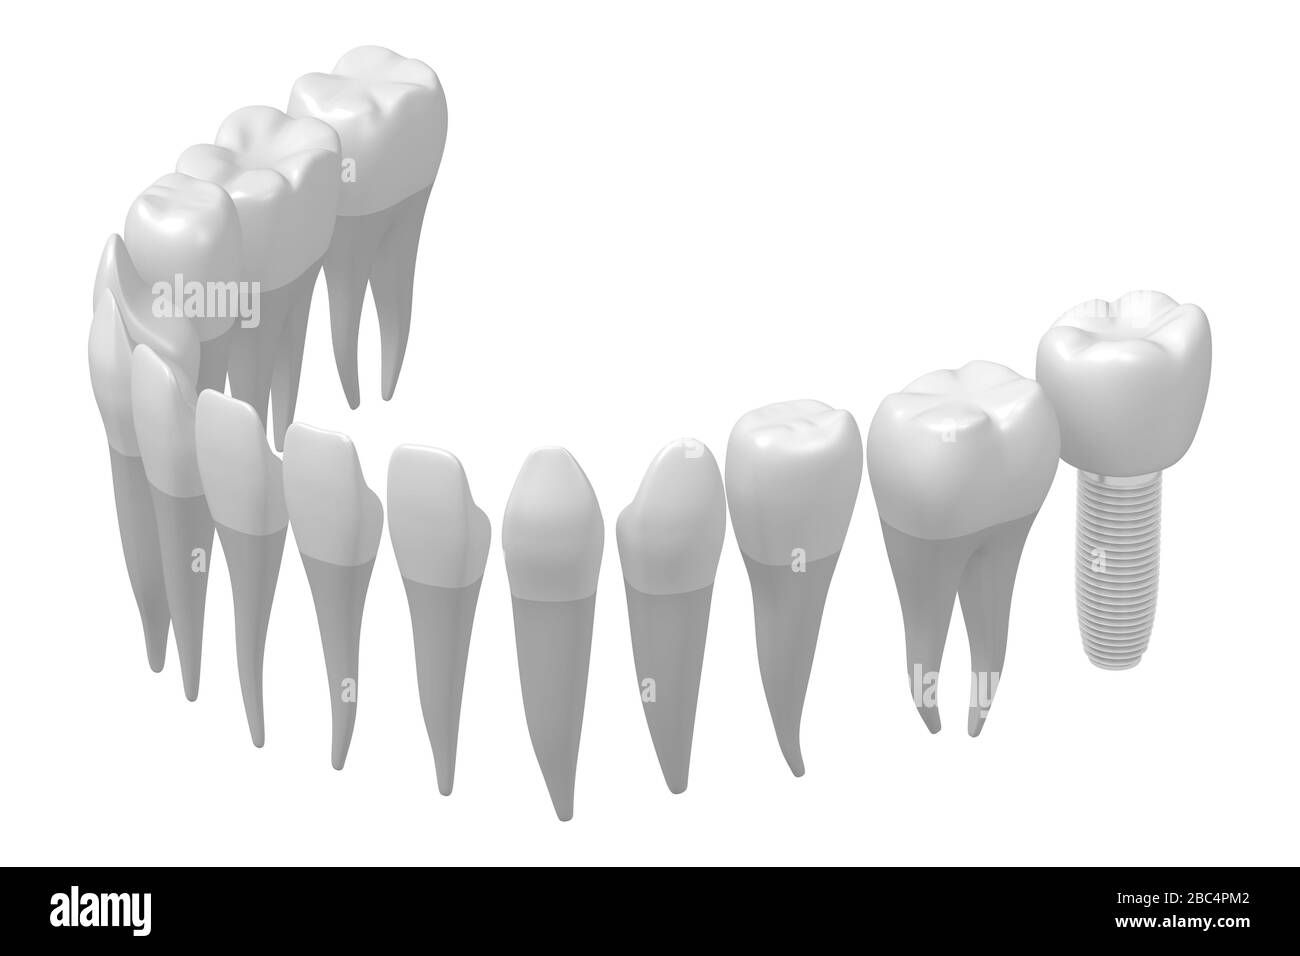 Implant dentaire/implant dentaire Banque D'Images